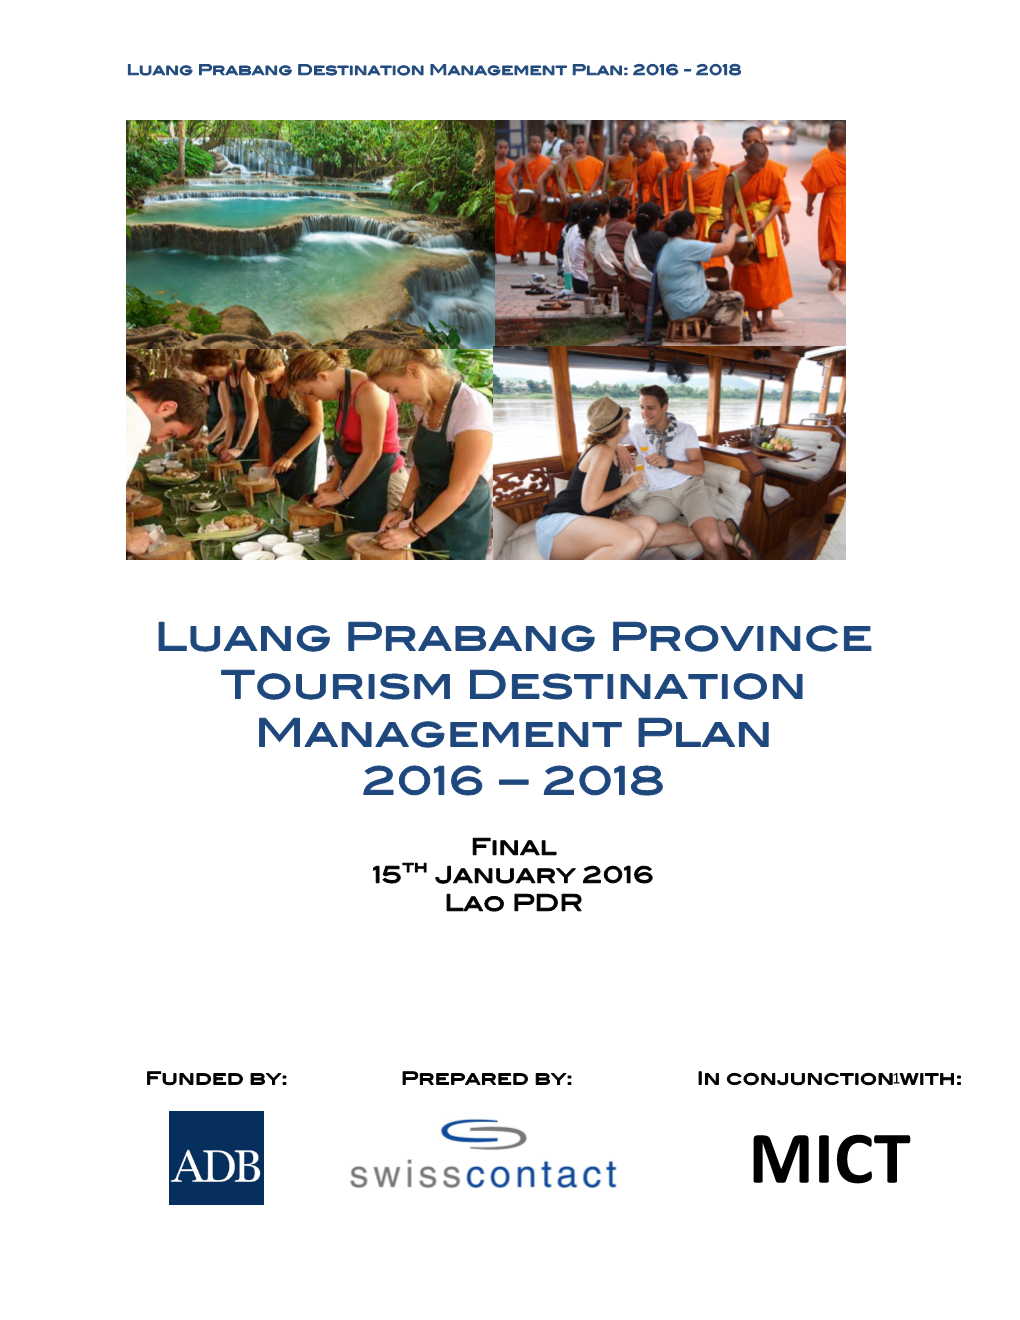 Luang Prabang Province Destination Management Plan: 2016 - 2018